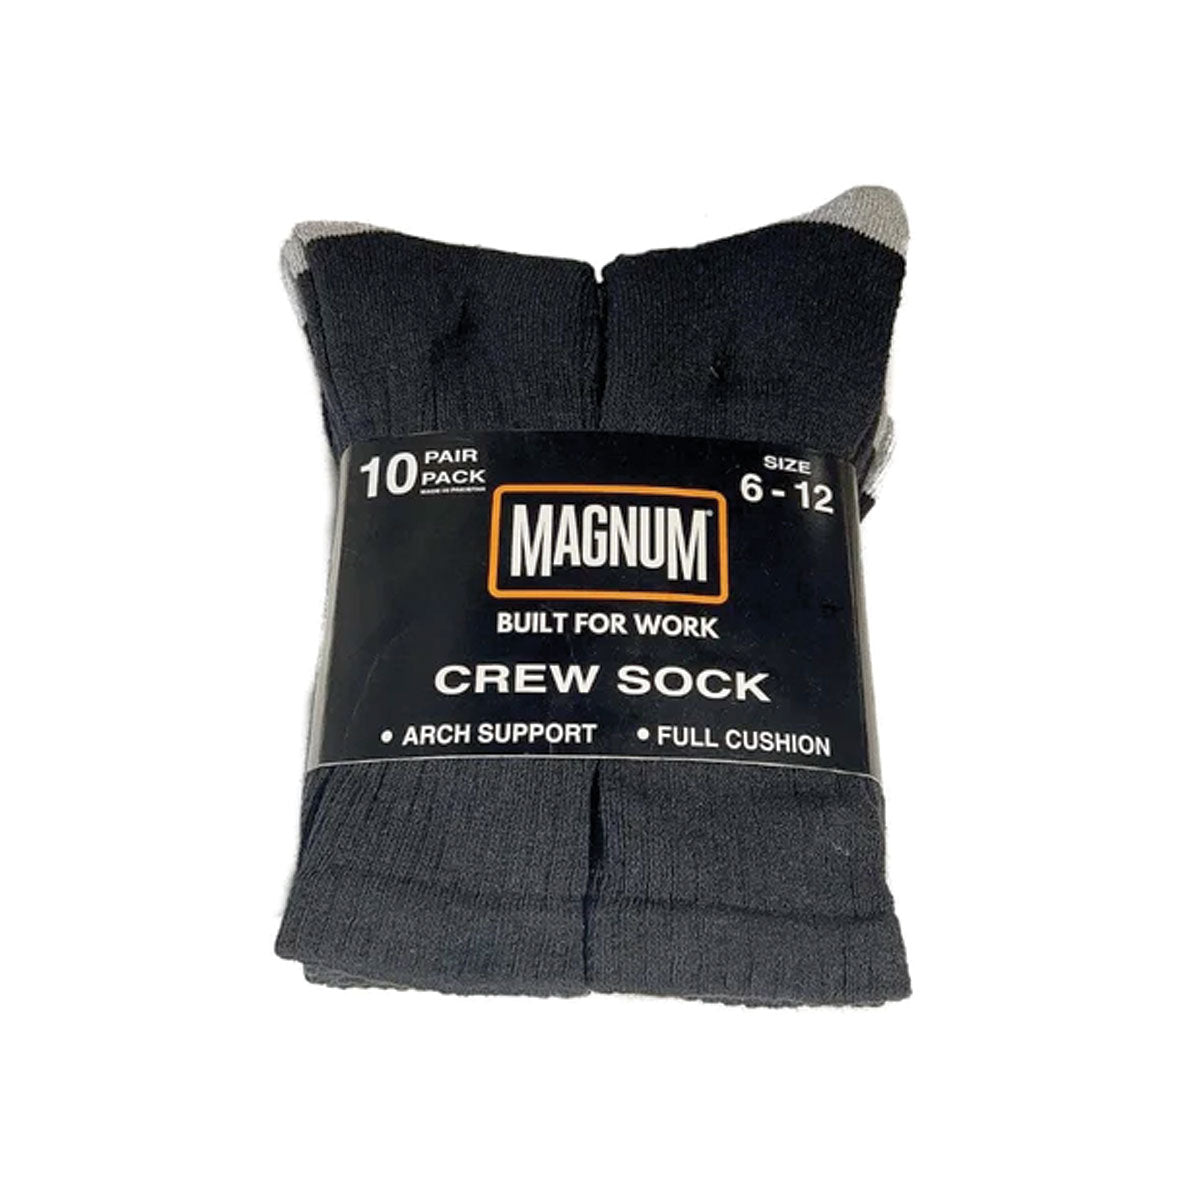 Magnum 10 Pack Crew Sock One Size Black Tactical Gear Australia Supplier Distributor Dealer